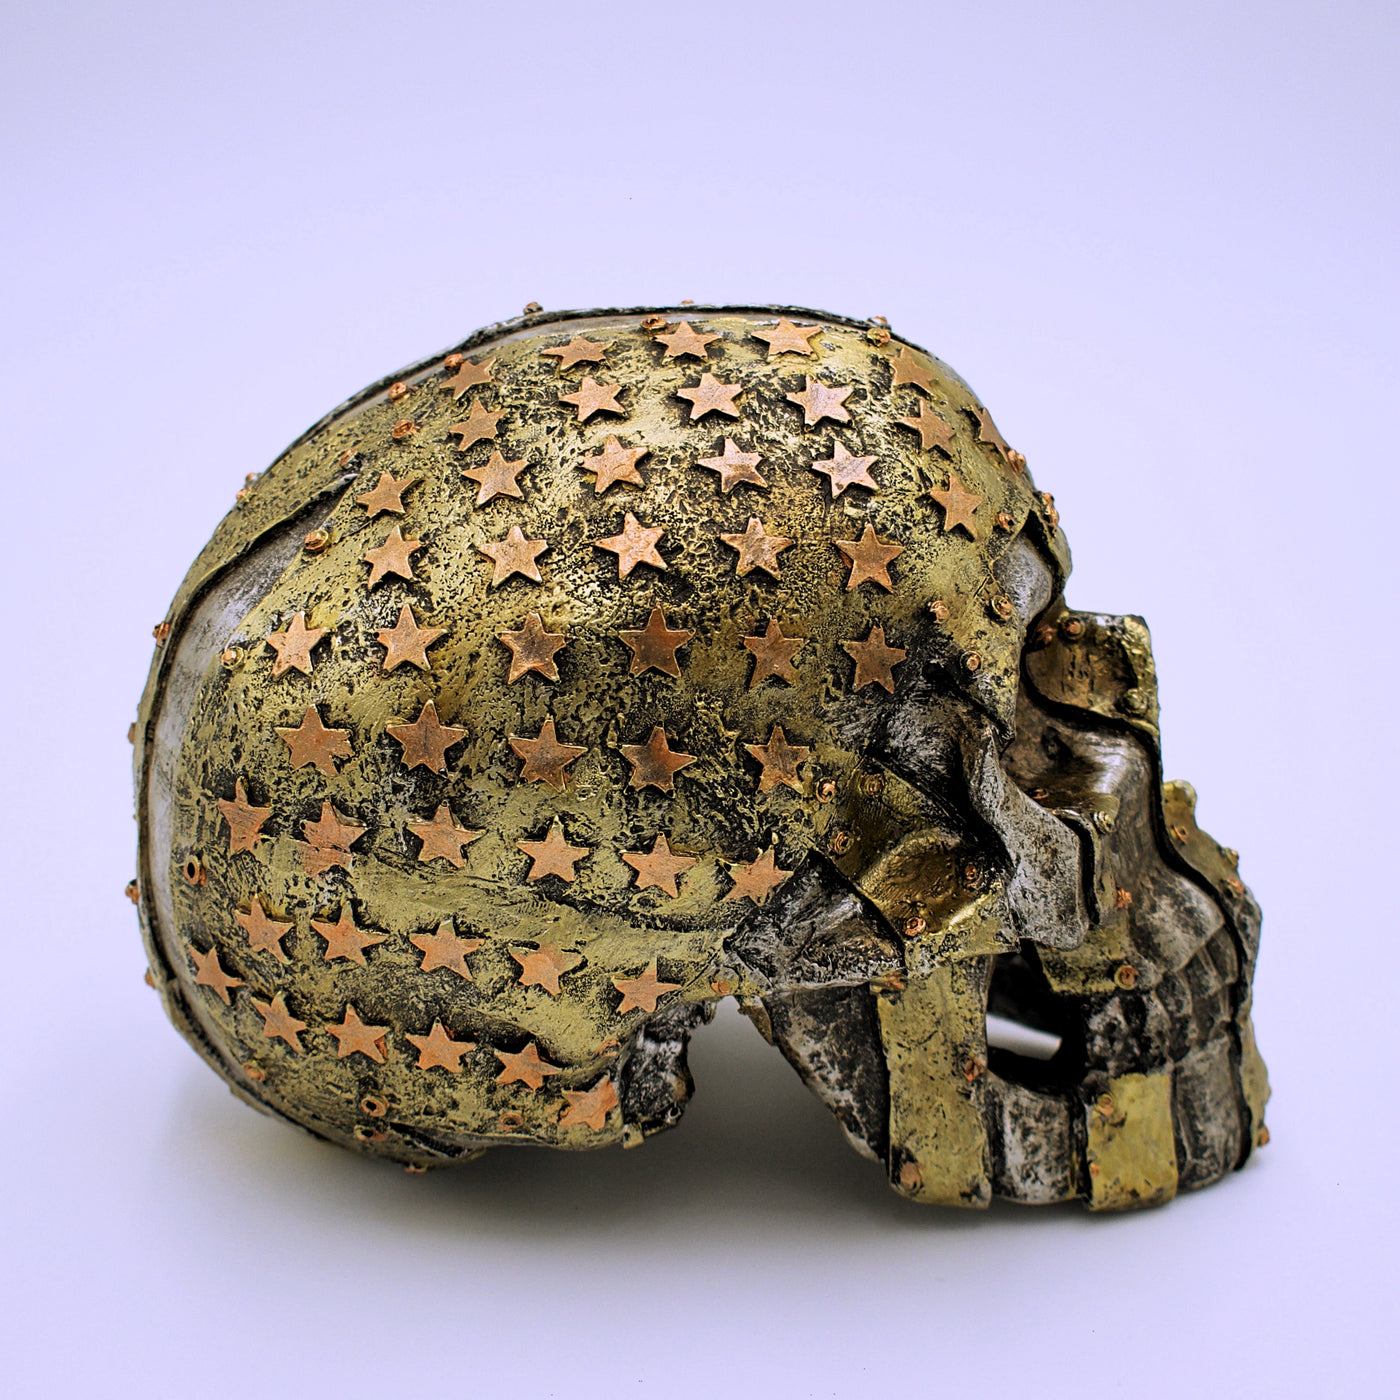 Metallic American Flag Skull Sculpture - The Cranio Collections